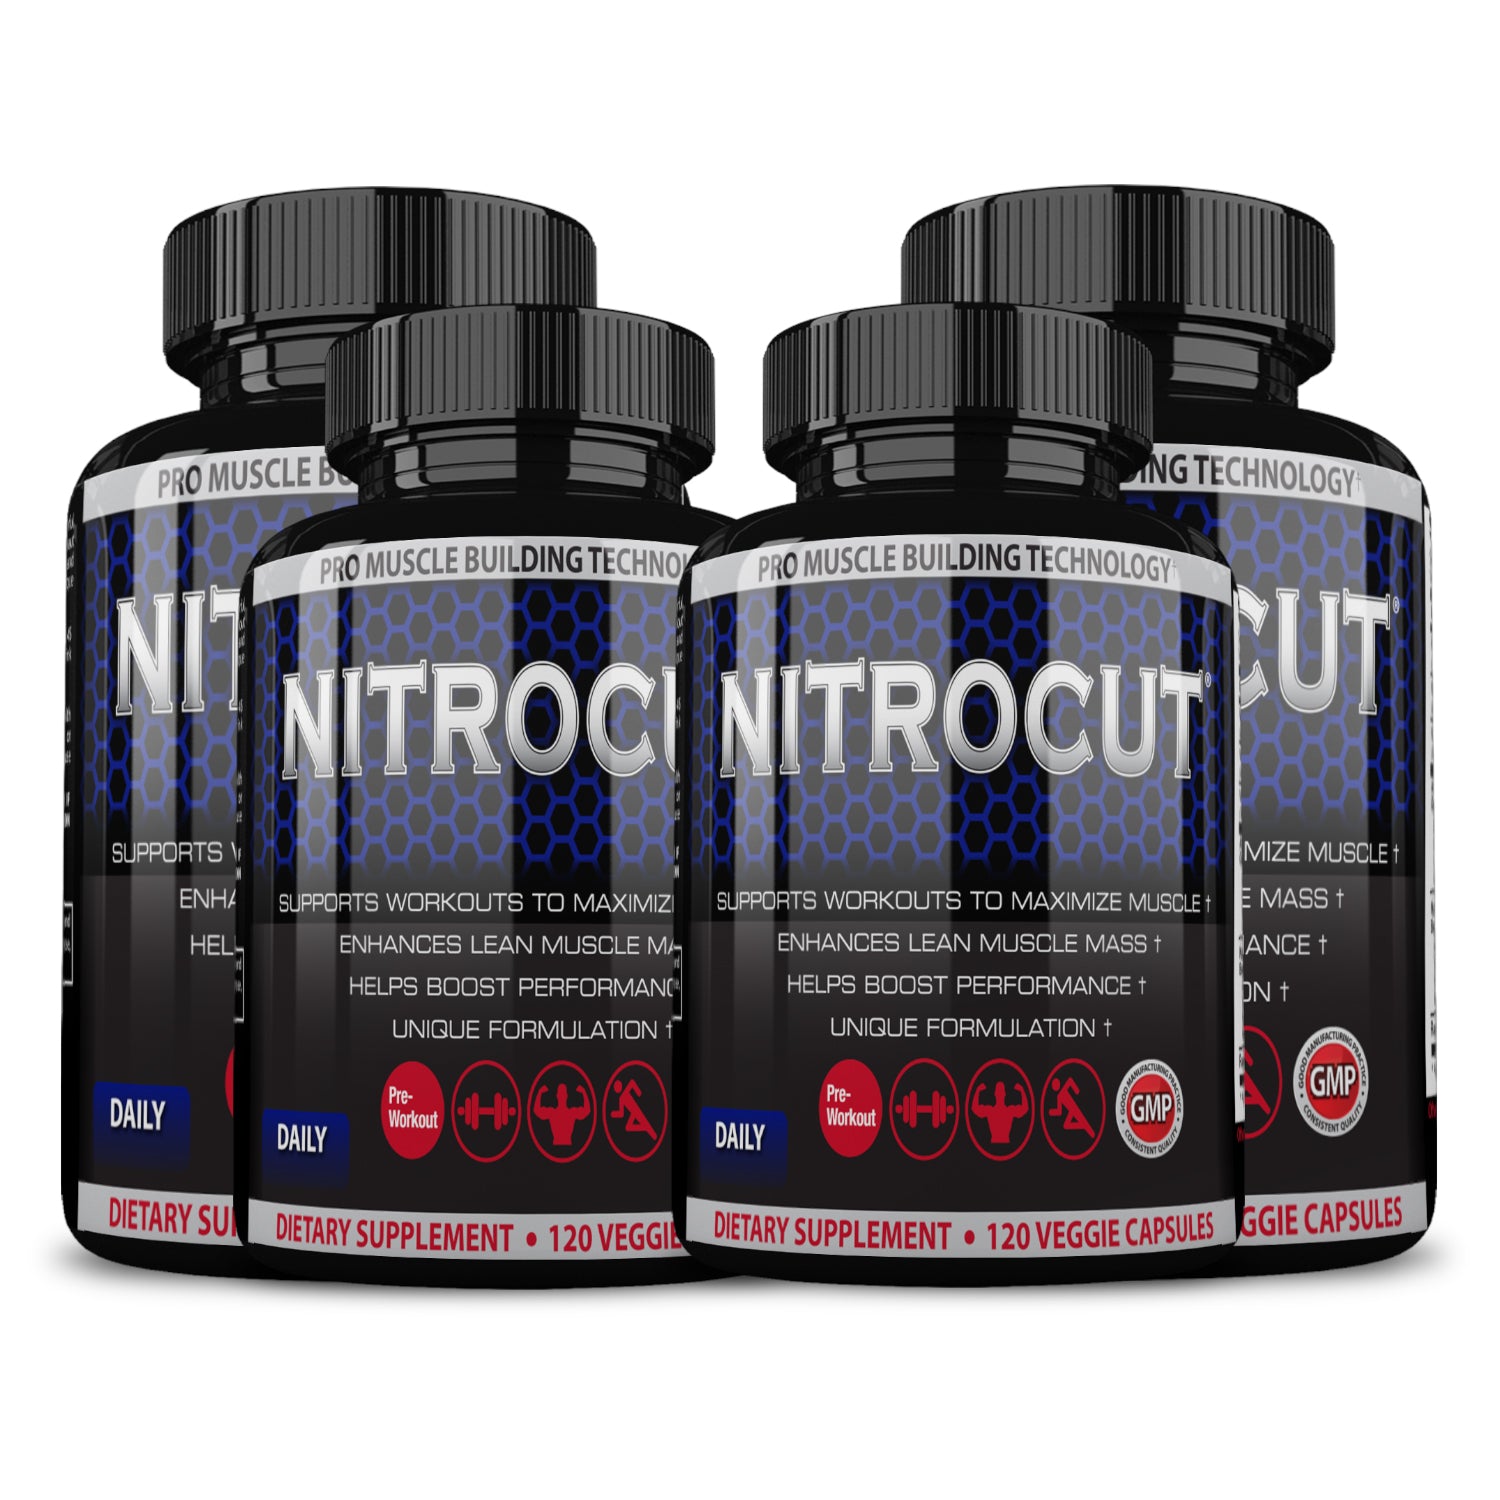 Nitrocut Buy2 Get2 Free